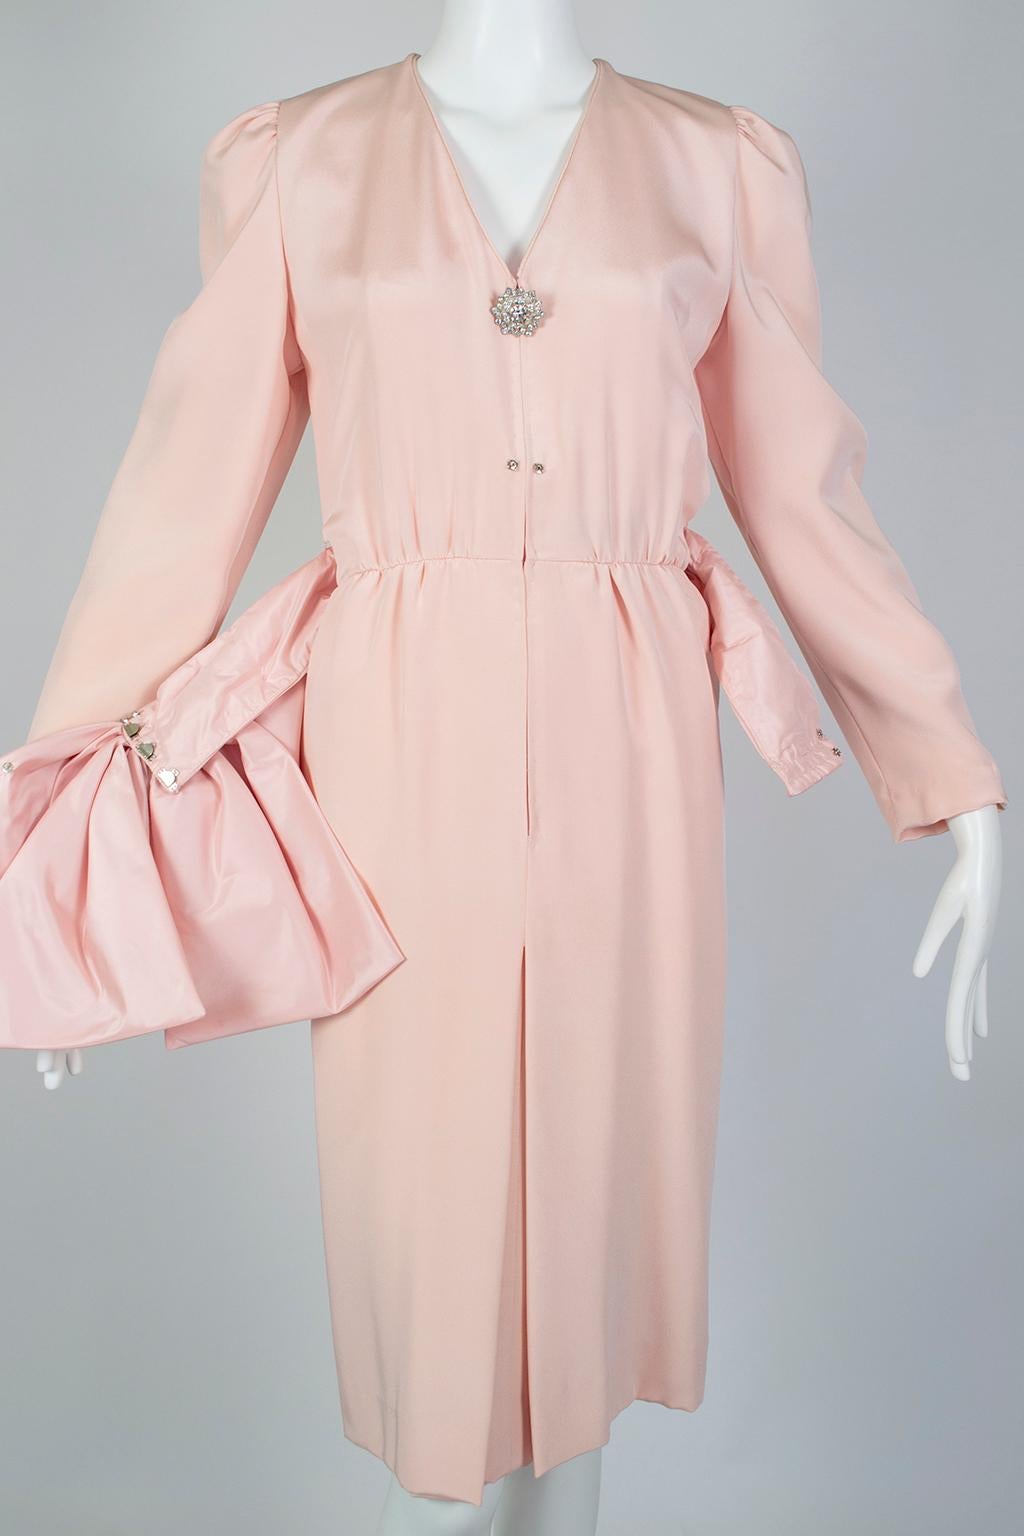 Akira Isogawa Pink Cocktail Dress with Oversize Jewel Cummerbund Bow – M, 1980s For Sale 4